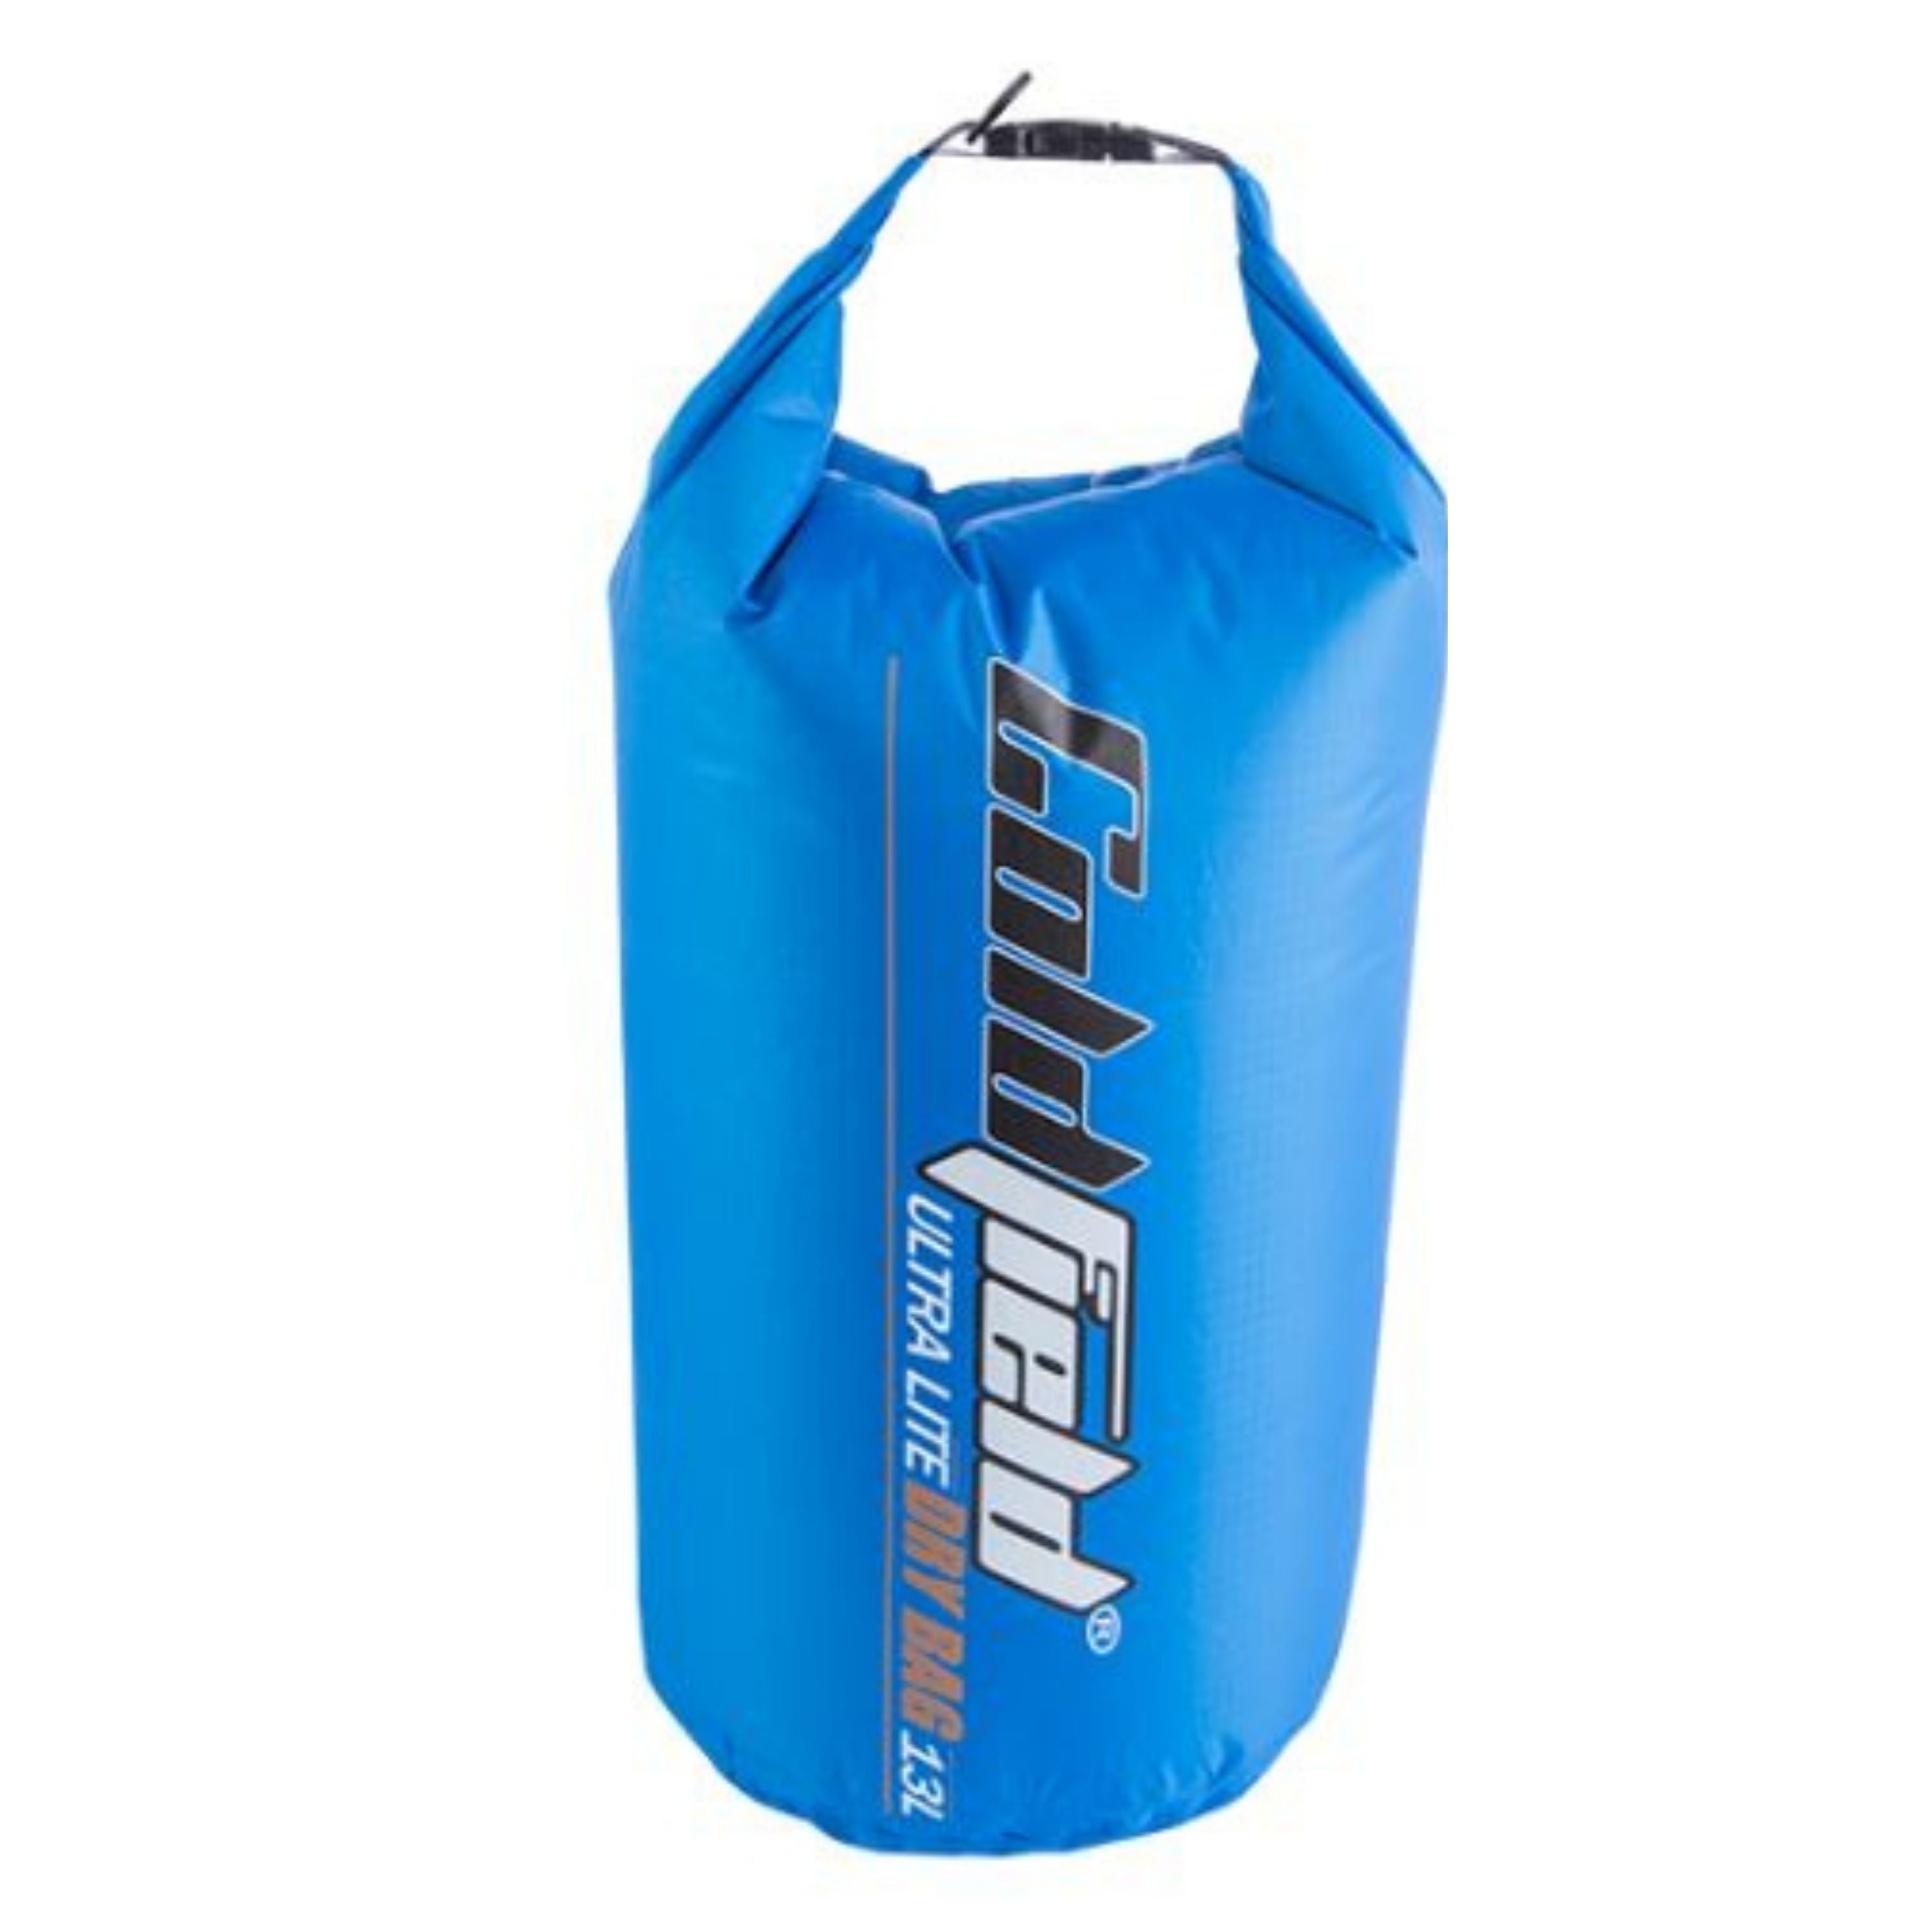 Sac imperméable ultraléger - 13 L||Ultra light dry bag - 13 L